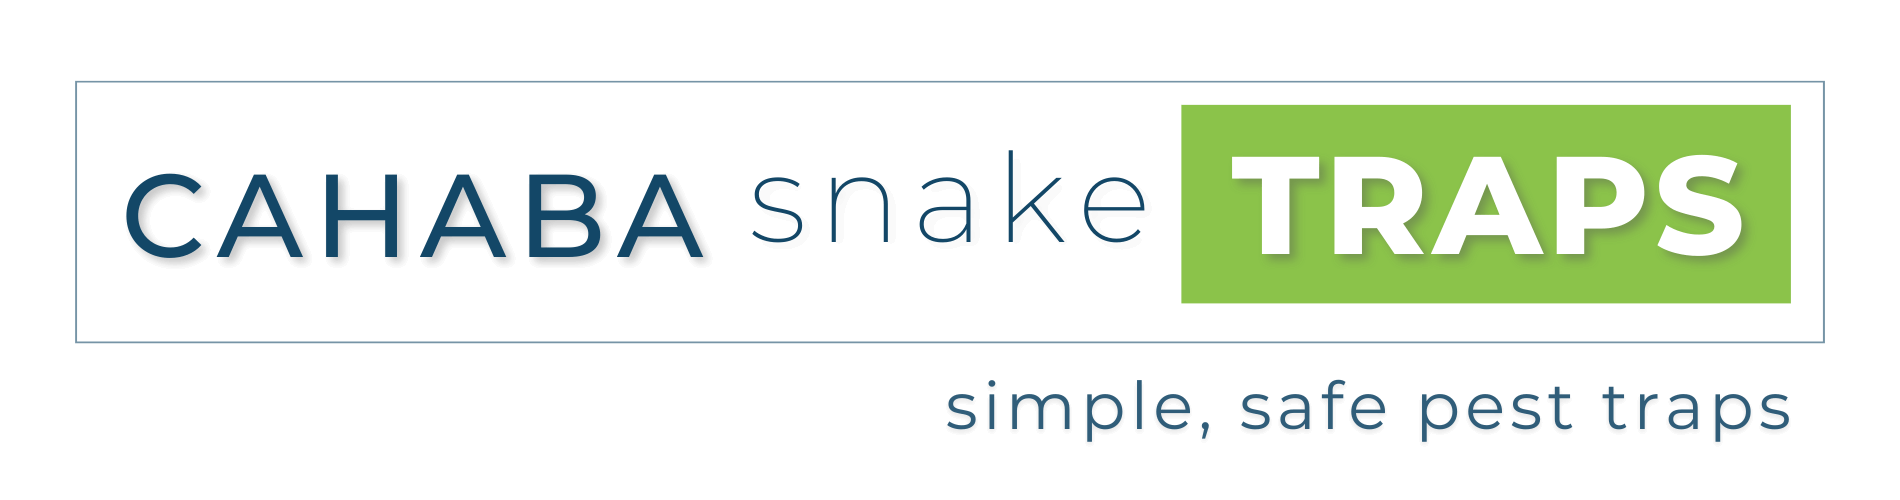 Snake Trap | Cahaba Snake Trap